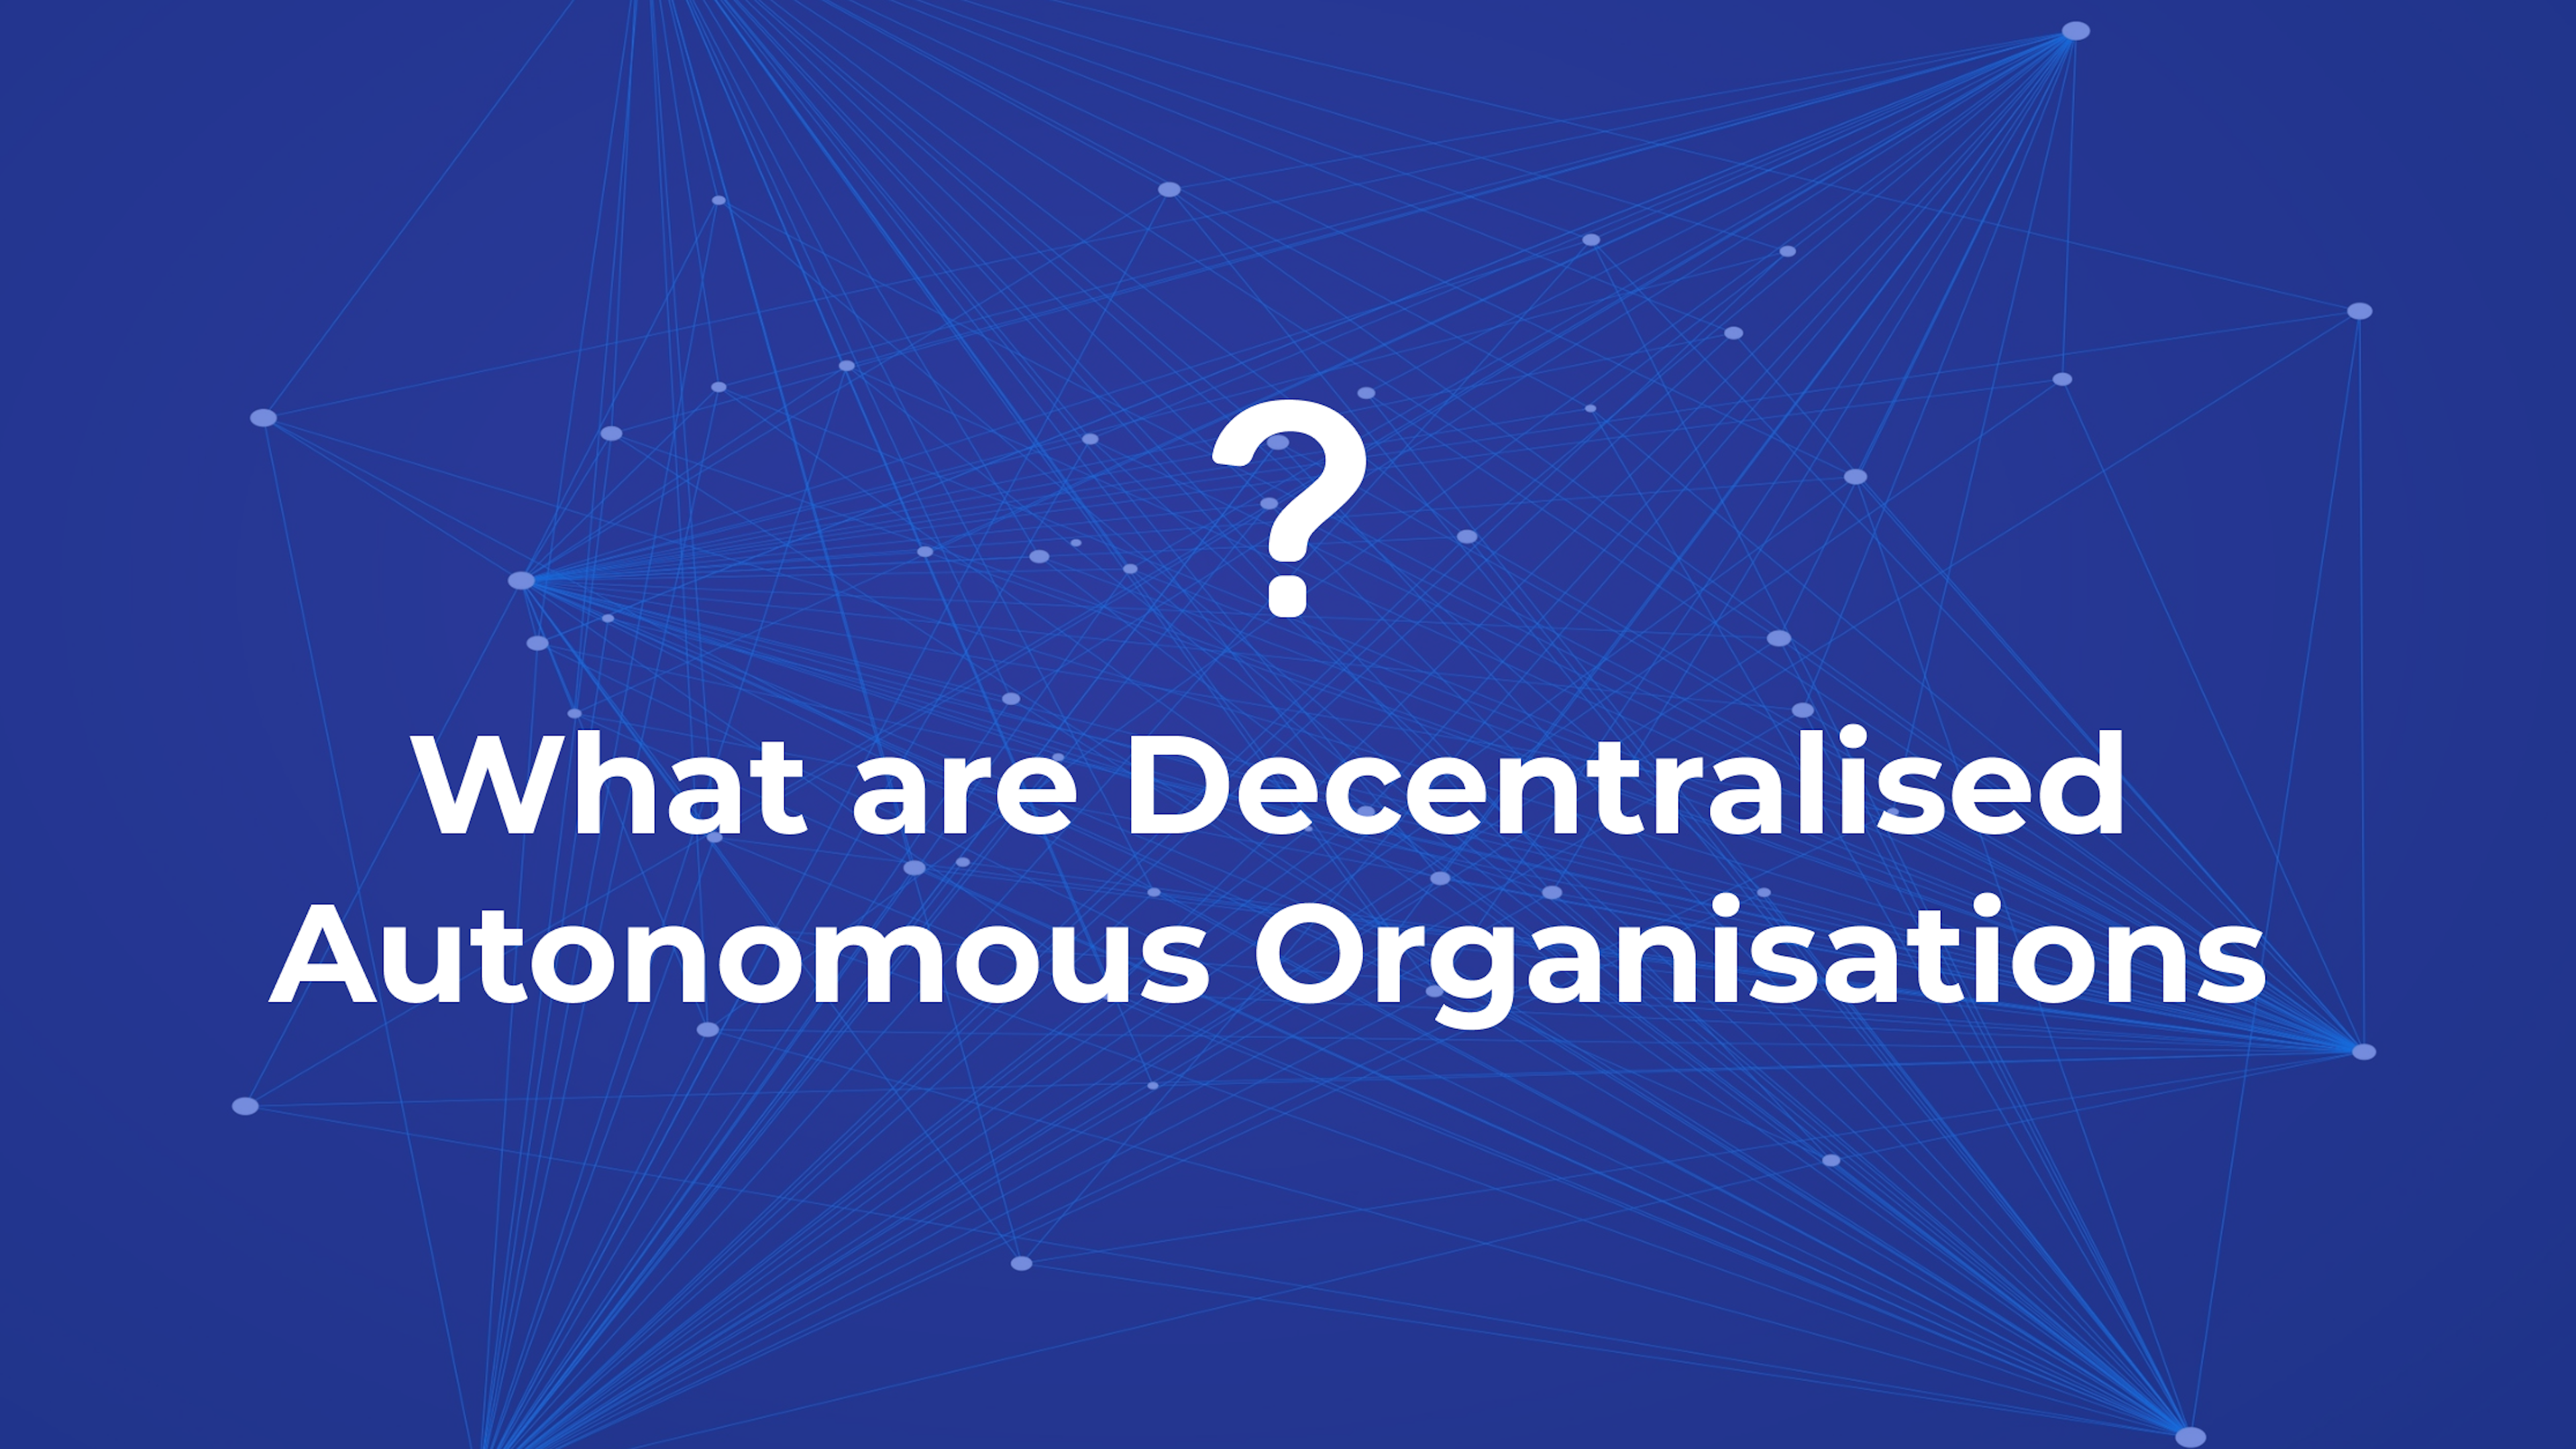 What are Decentralised Autonomous Organisations (DAOs)?